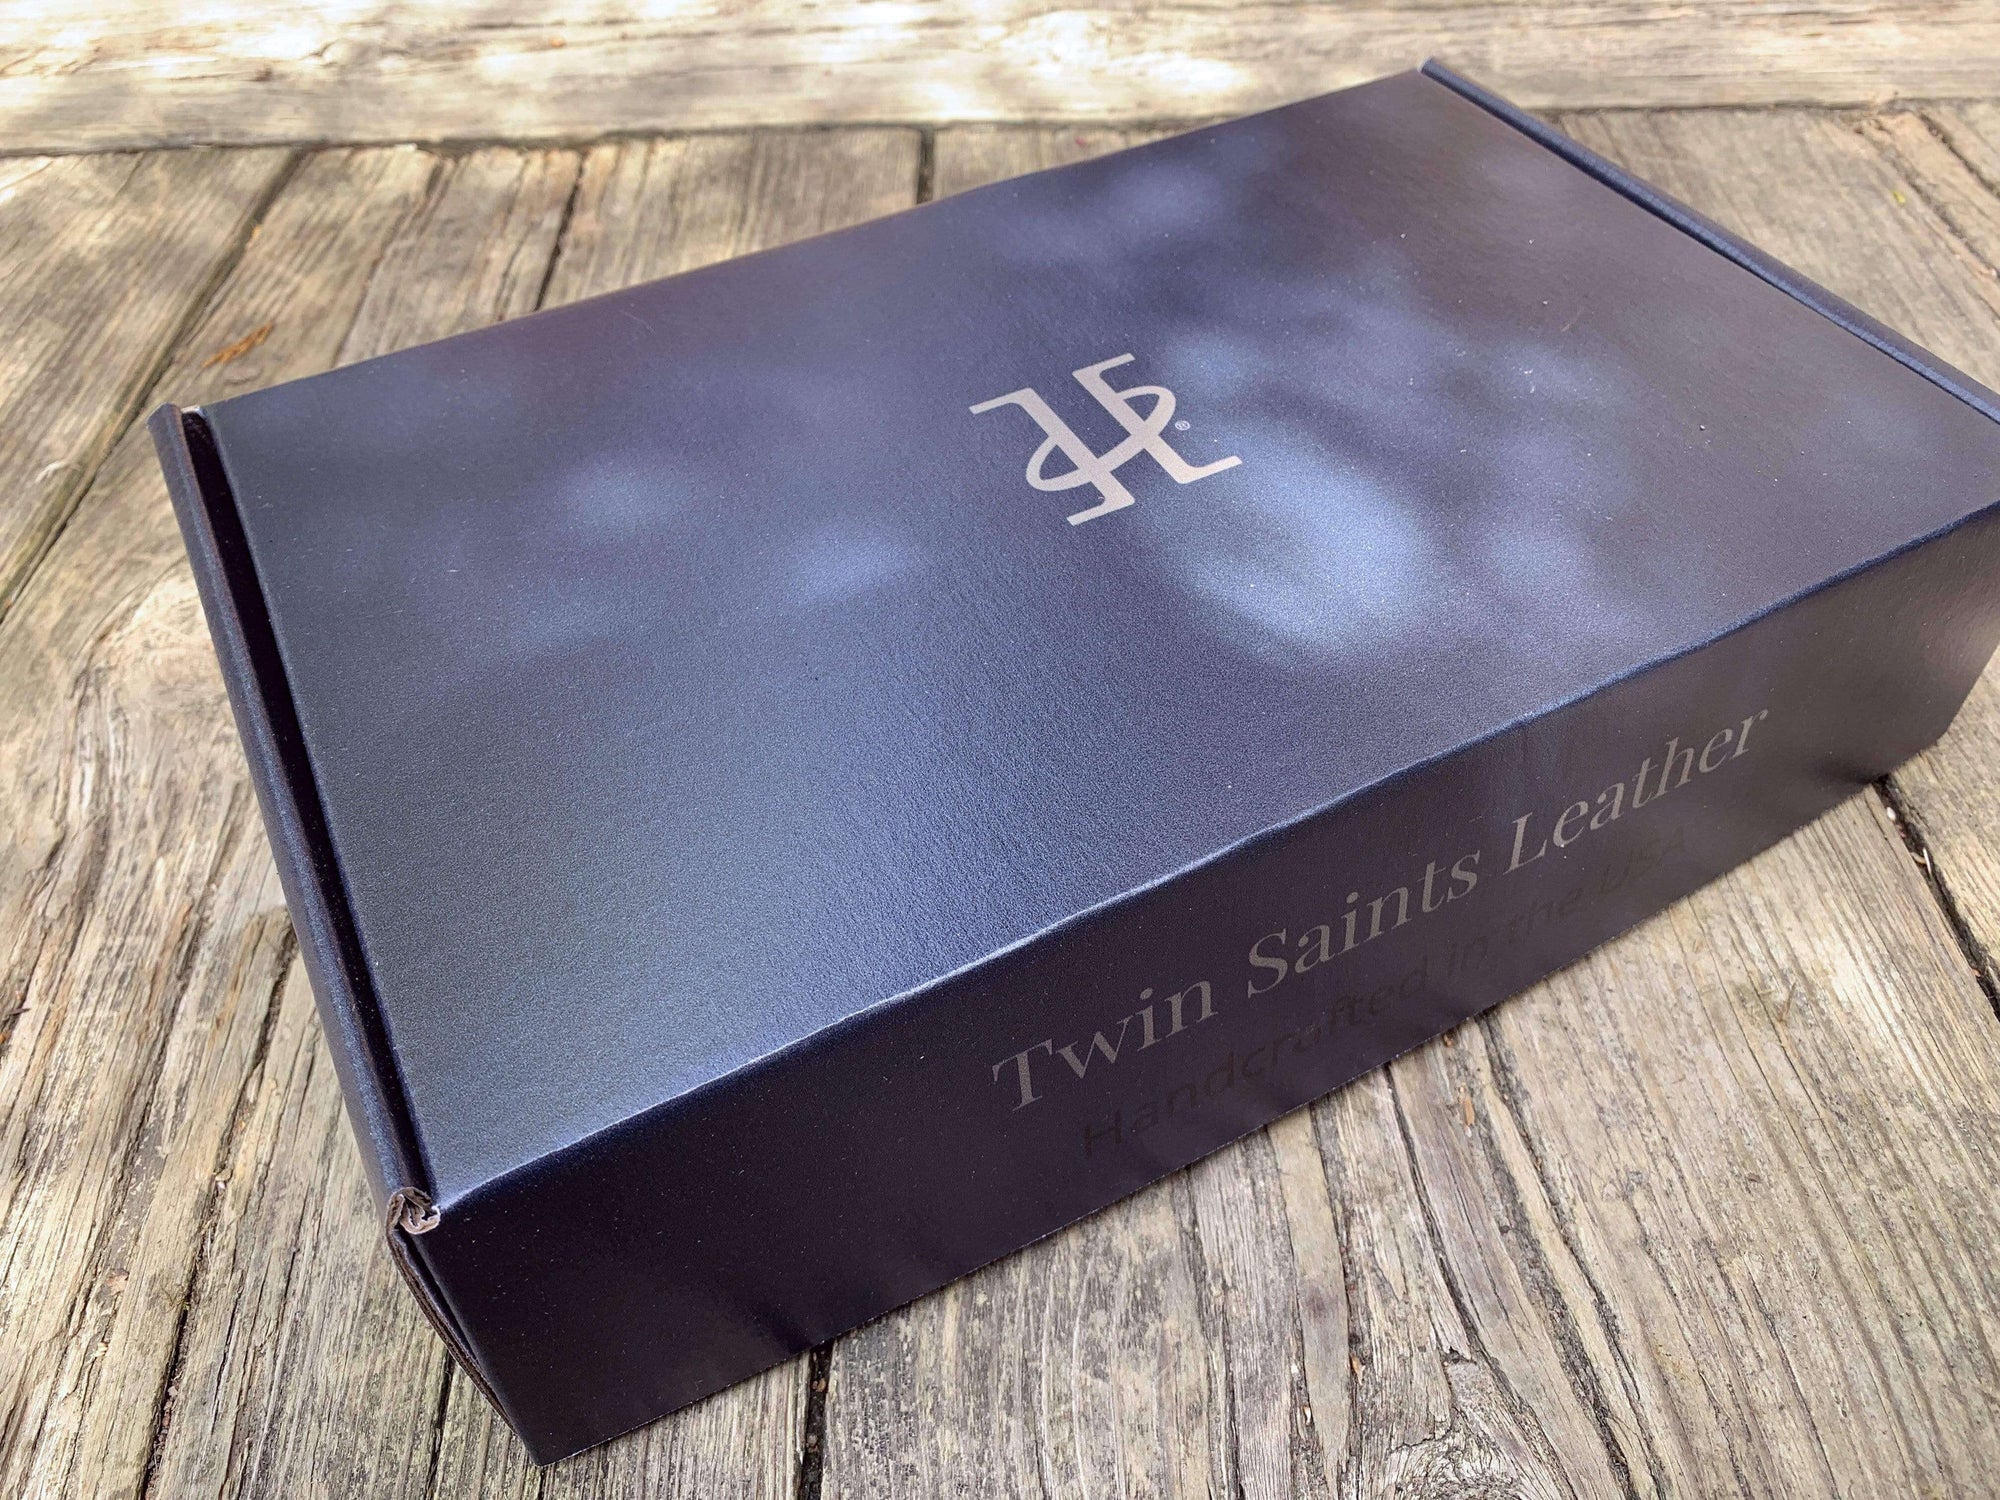 Twin Saints Leather Rectangular Gift Box.